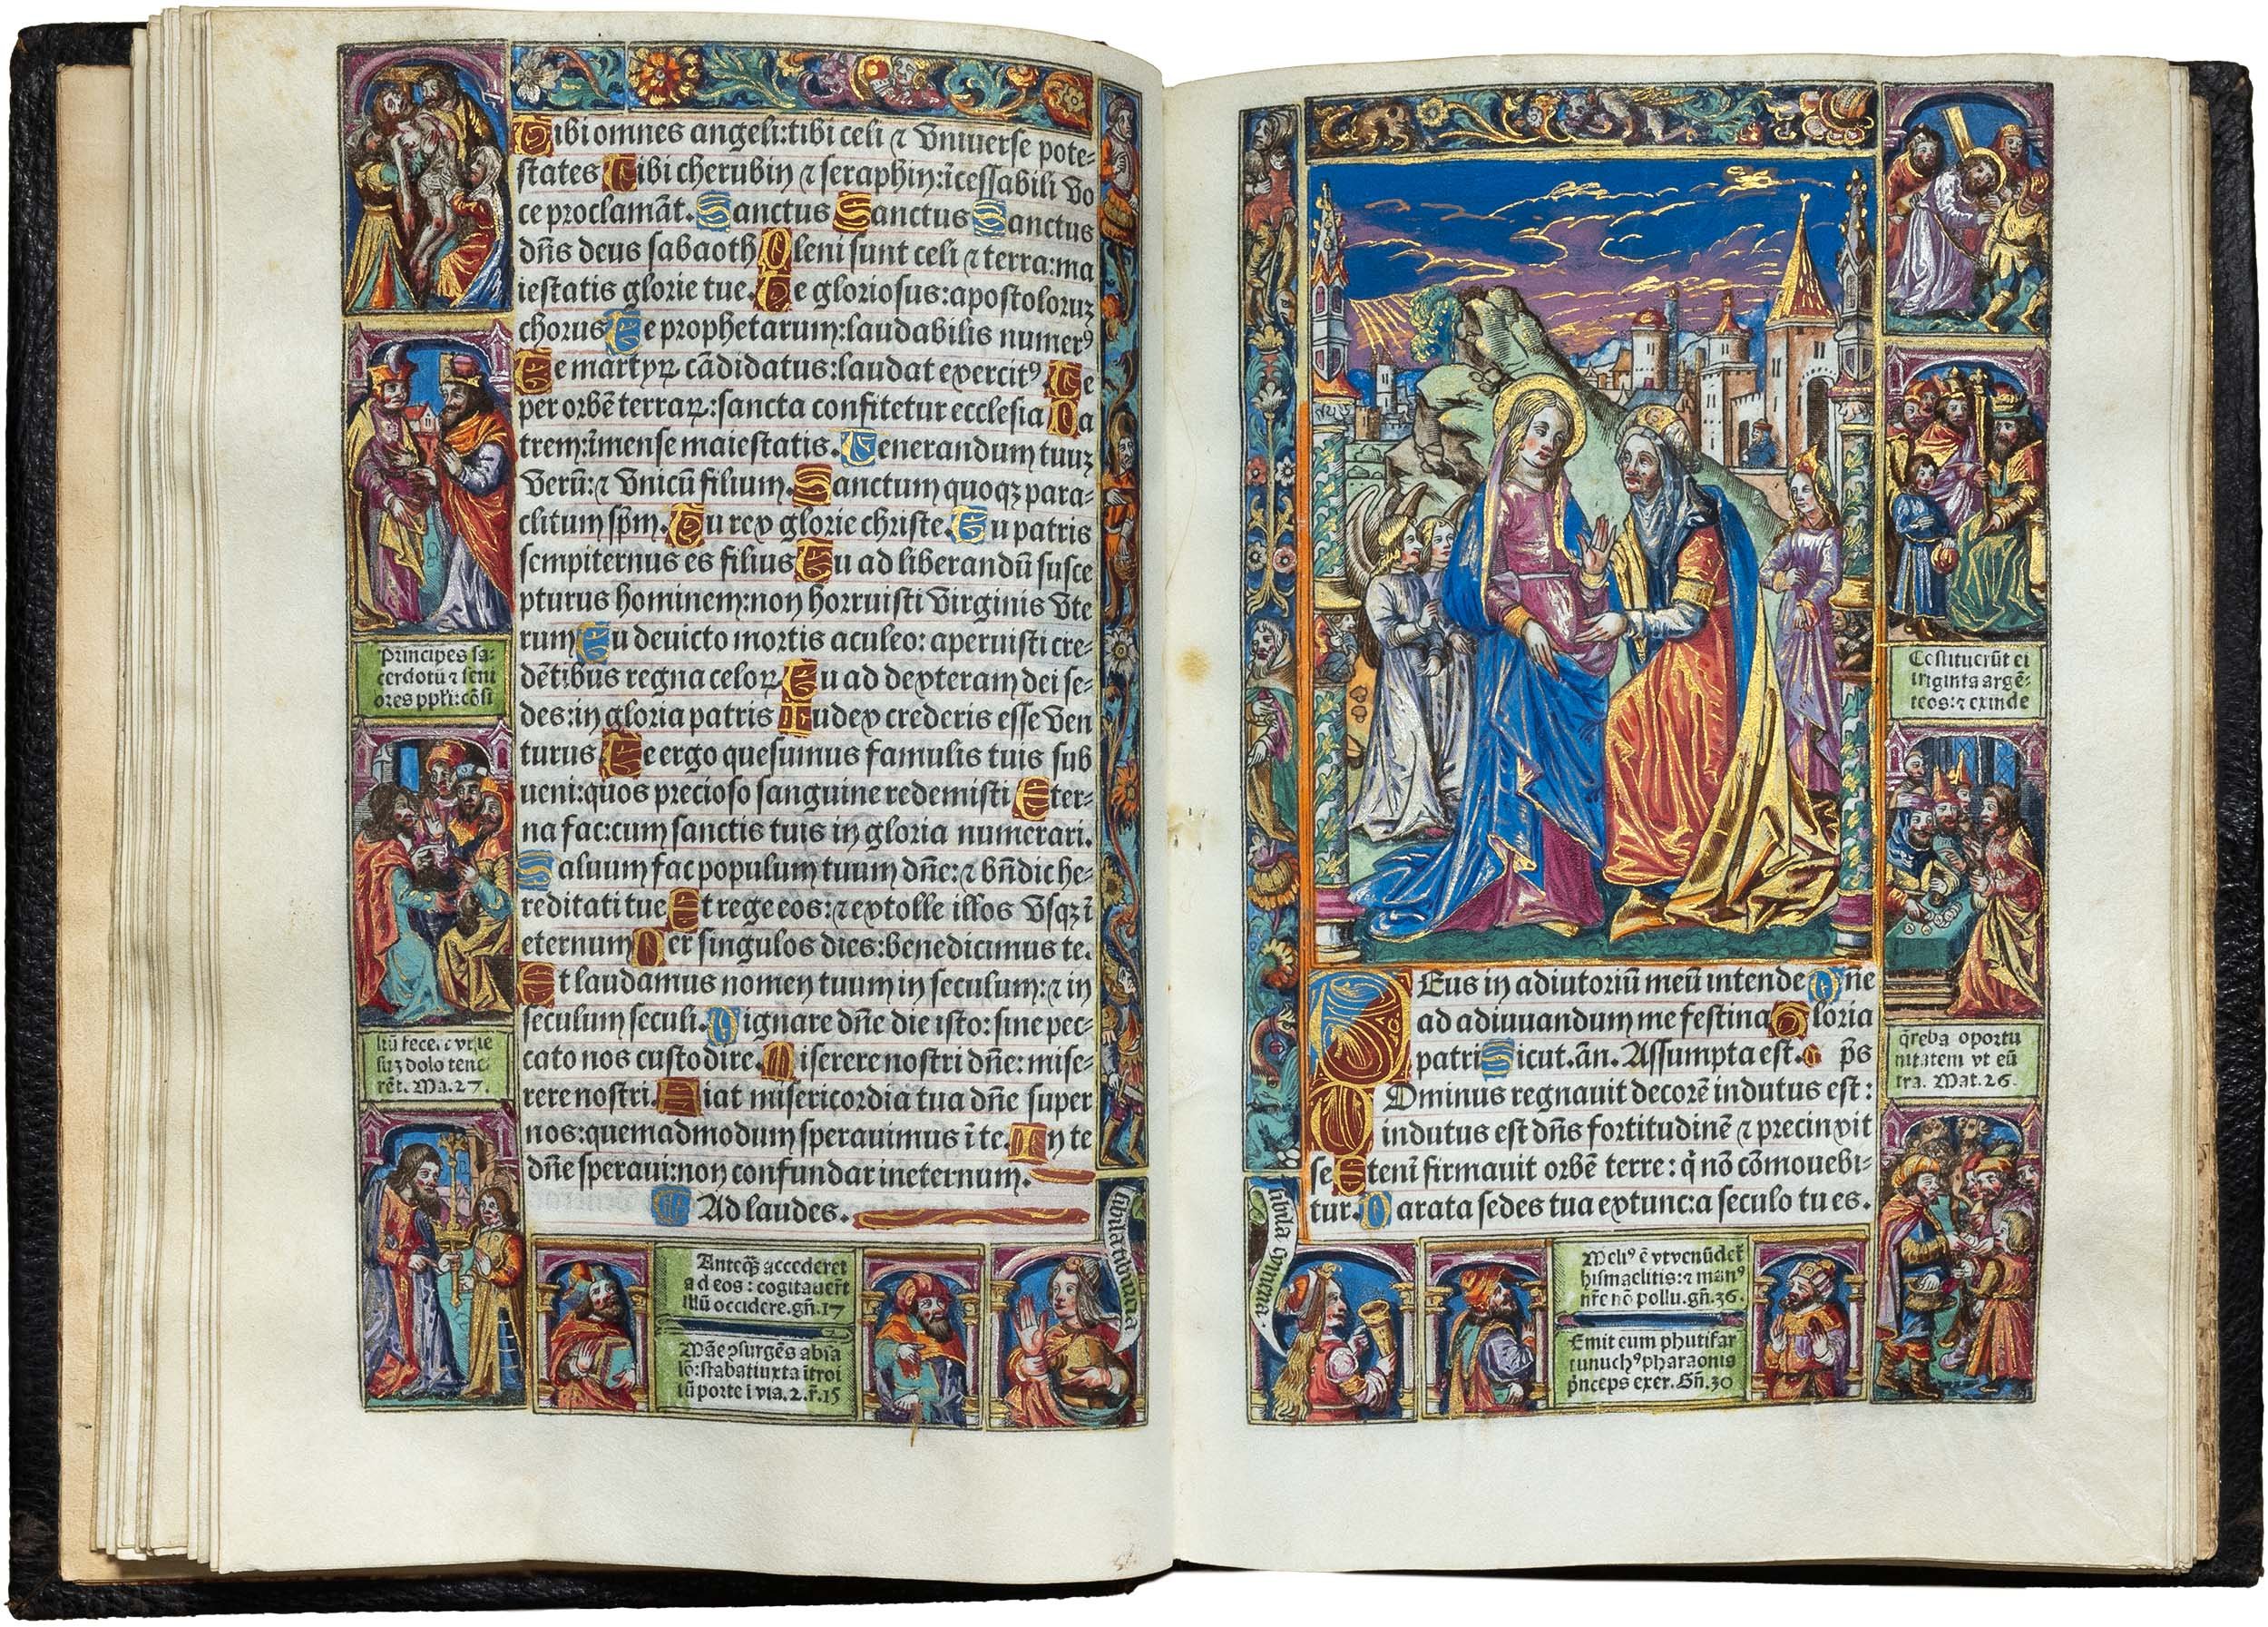 Printed-Book-of-Hours-10-january-1503-horae-bmv-kerver-remacle-illuminated-vellum-copy-schönborn-buchheim-25.jpg